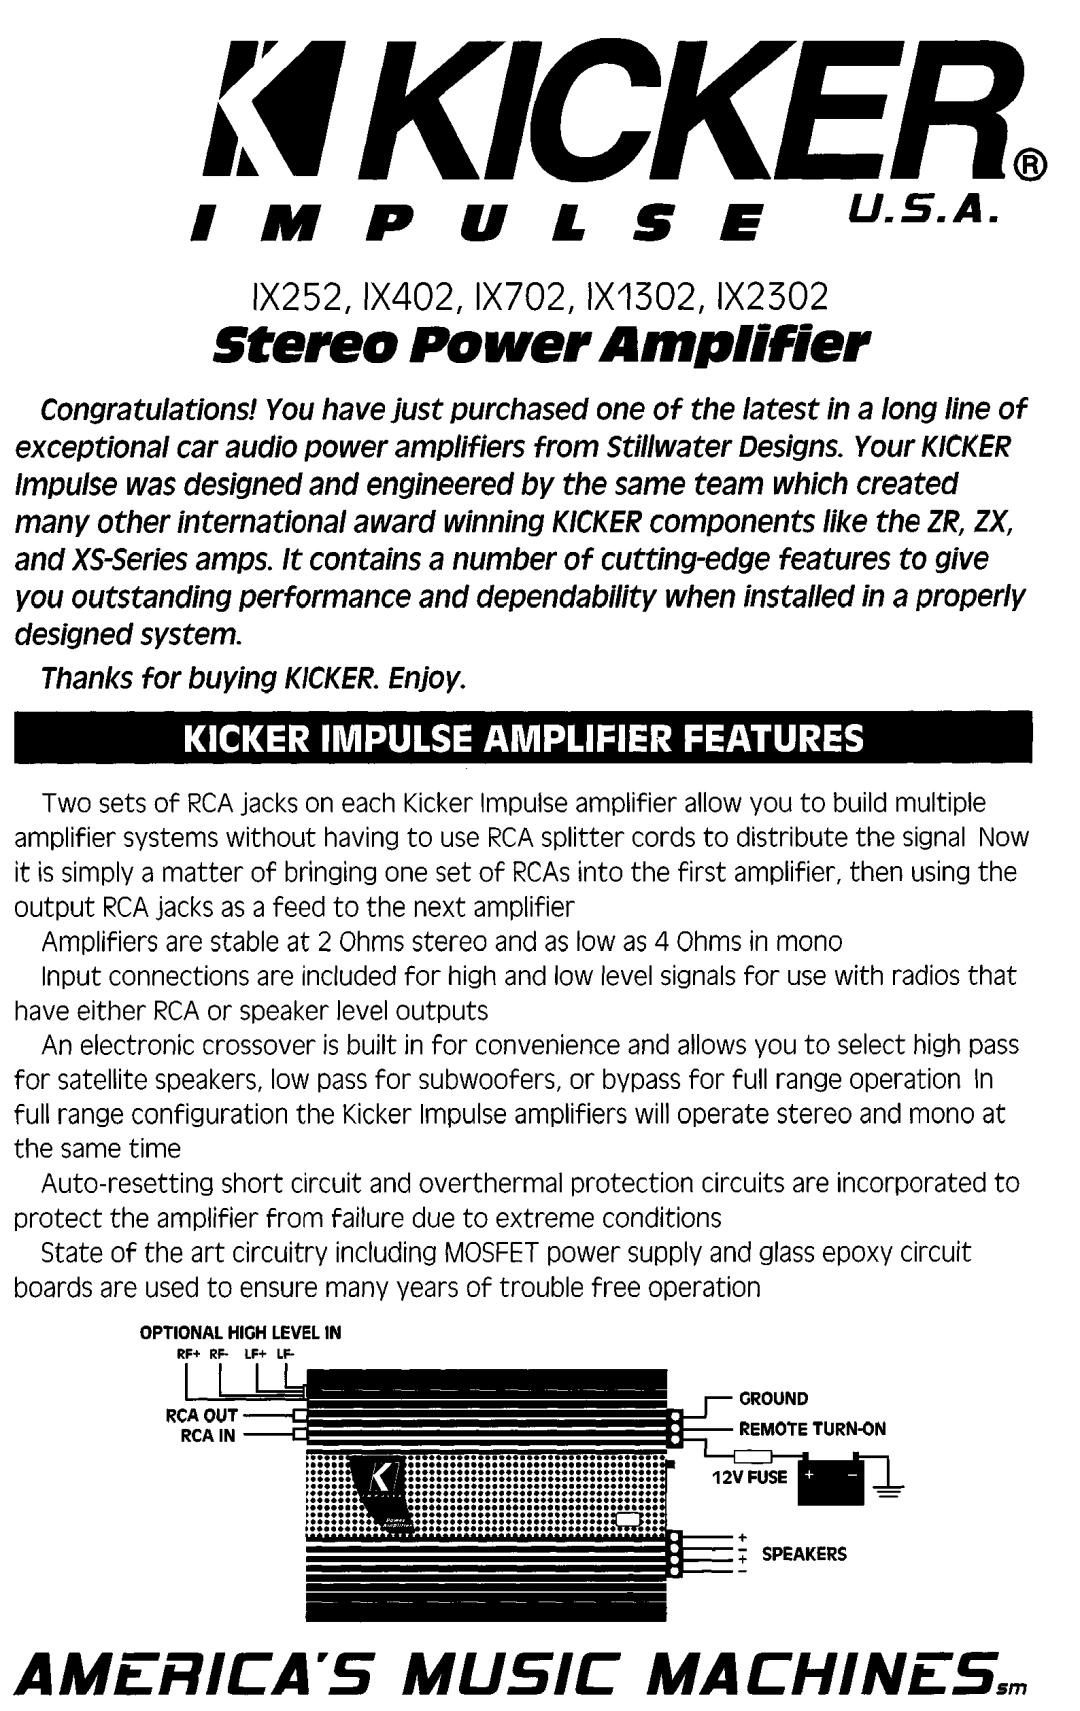 Kicker manual Stereo Power Amplifier, AMiWCA’5 MUSIC MACHMESs, 1X252,1X402, 1X702, 1X1302,IX2302, Mkicker 